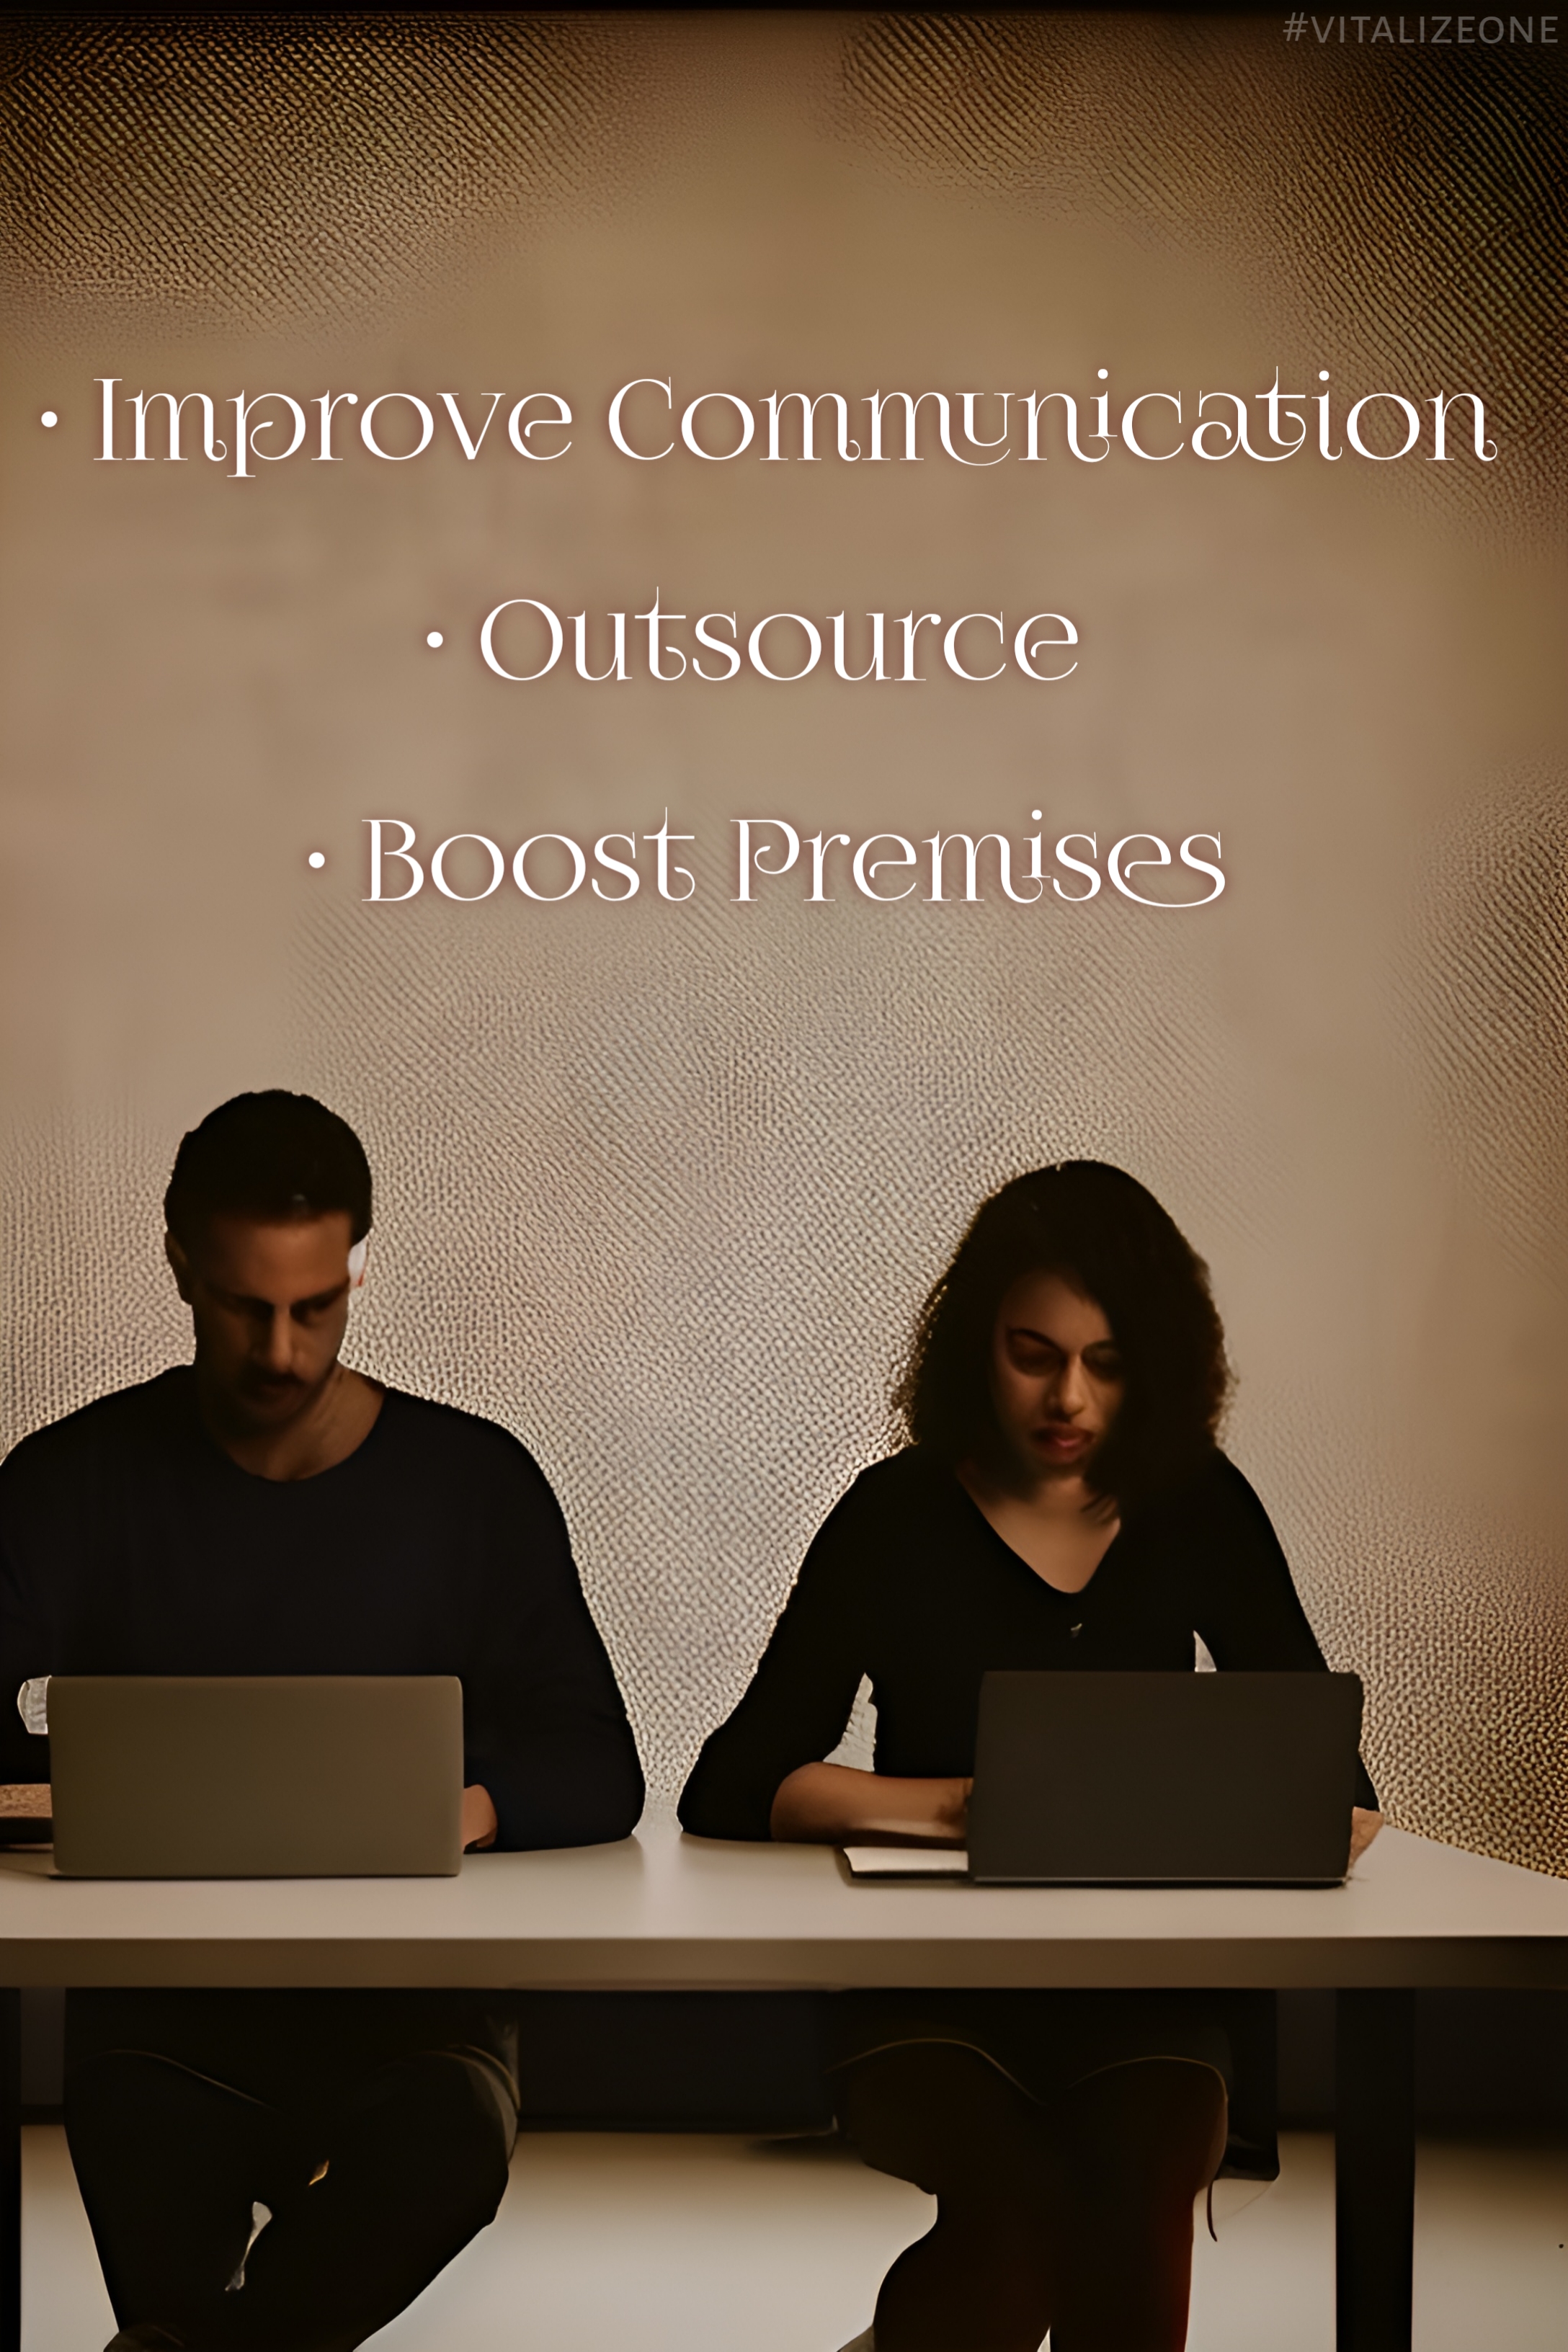 Improve Communication | Outsource | Boost Premises | VitalyTennant.com | #vitalizeone | Team VitalyTennant.com